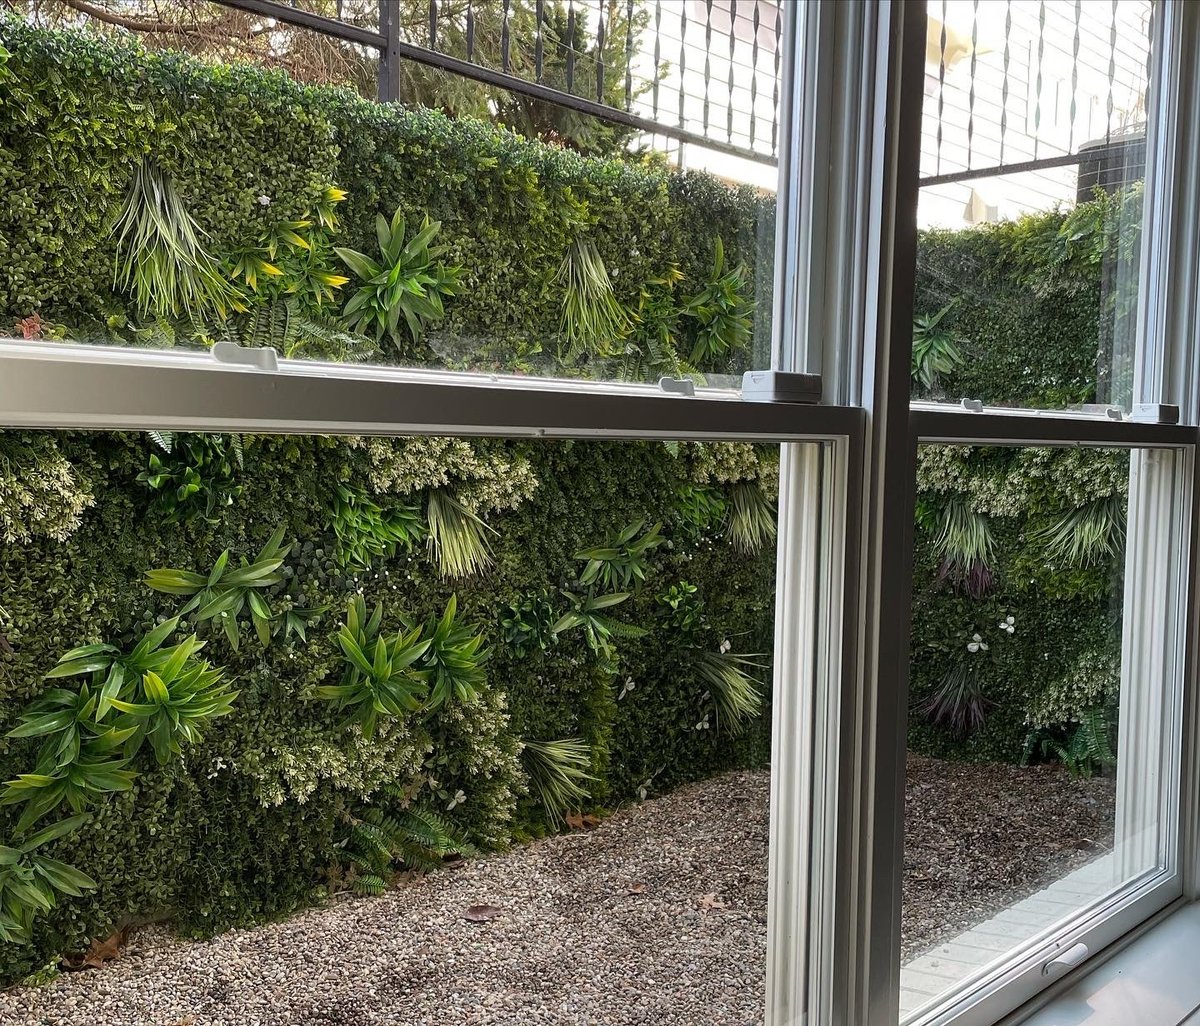 Artificial Greenery displayed in window well